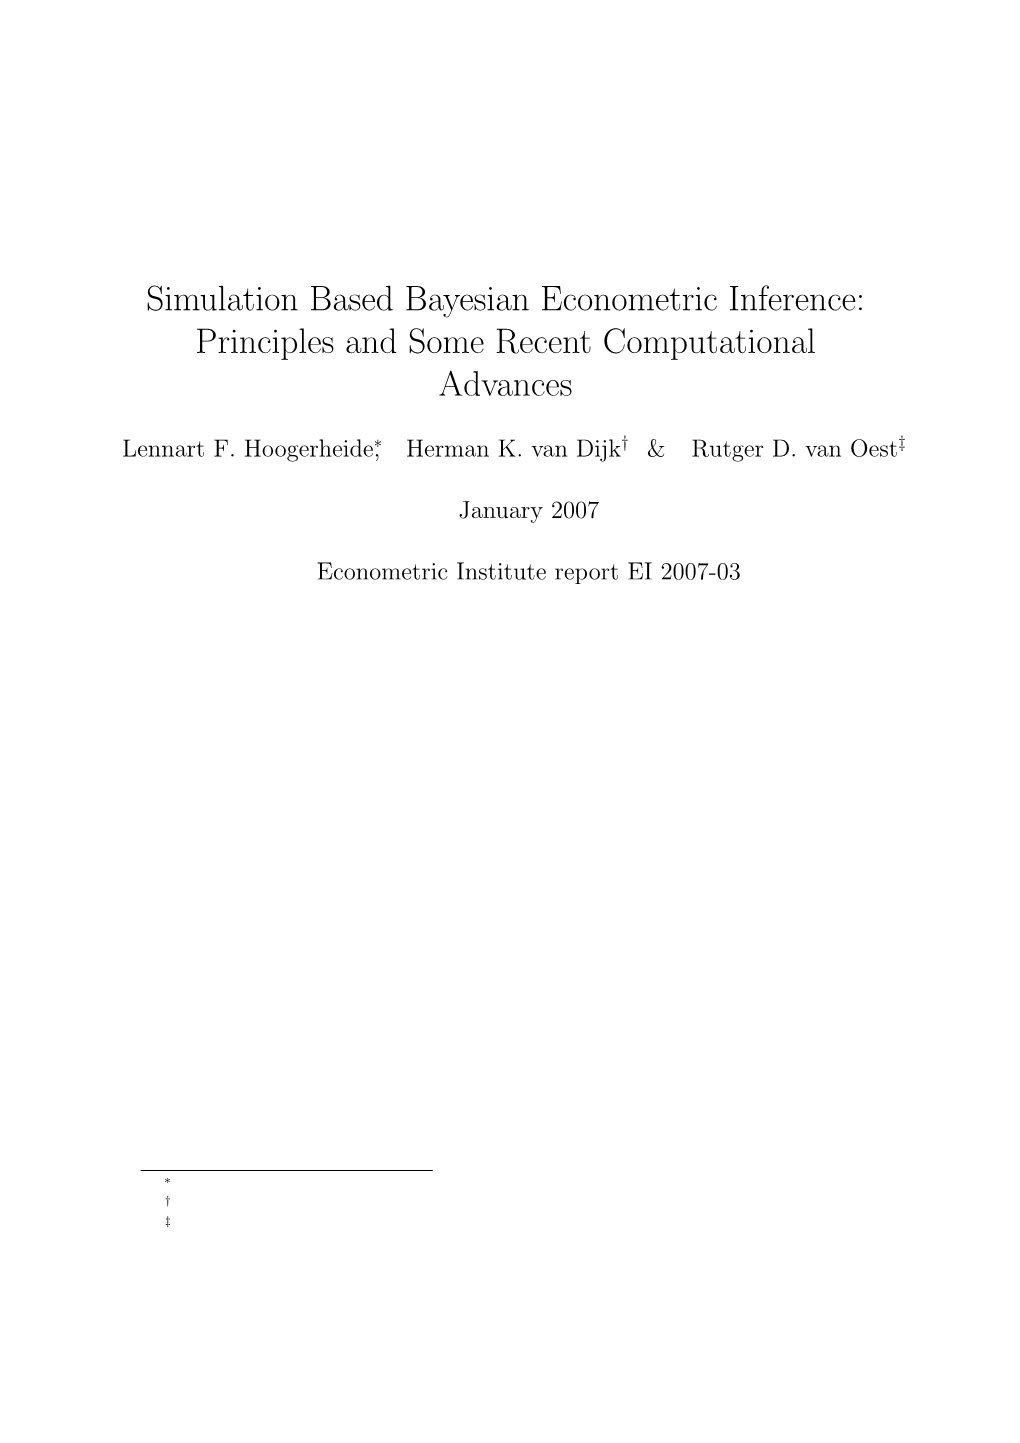 Simulation Based Bayesian Econometric Inference: Principles and Some Recent Computational Advances